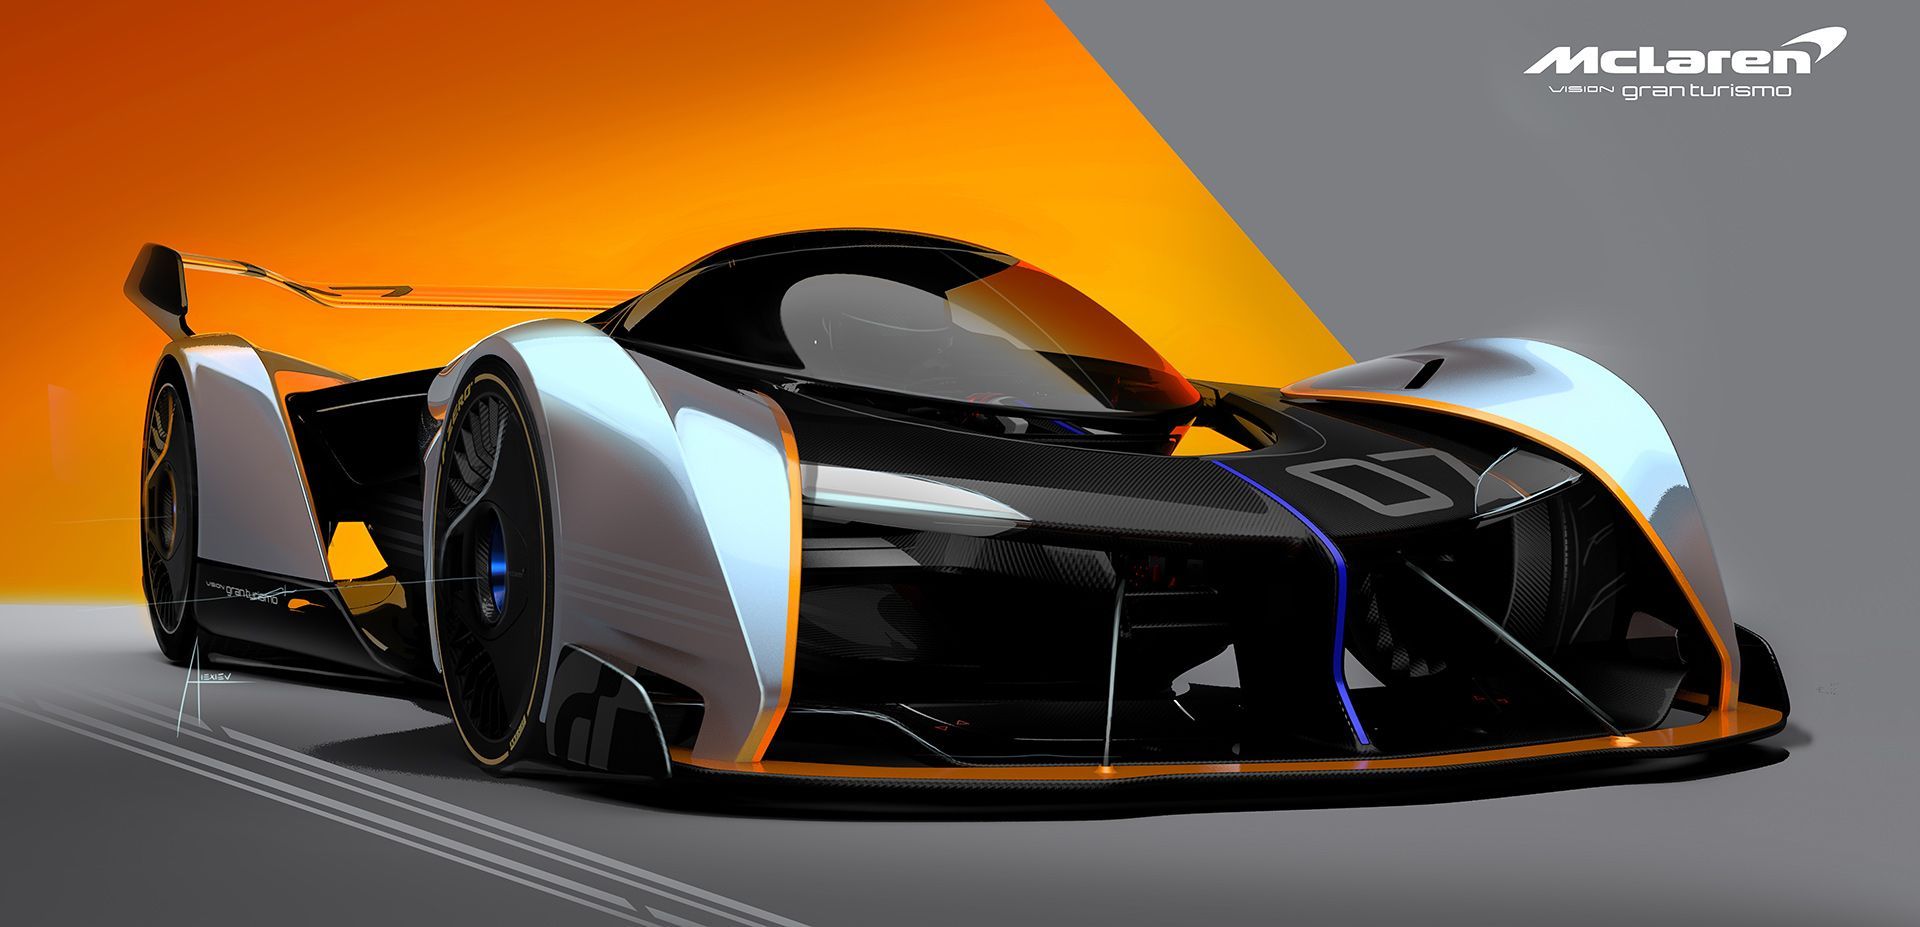 McLaren Ultimate Vision Gran Turismo Turismo.com. High Performance Cars, Performance Cars, Super Cars